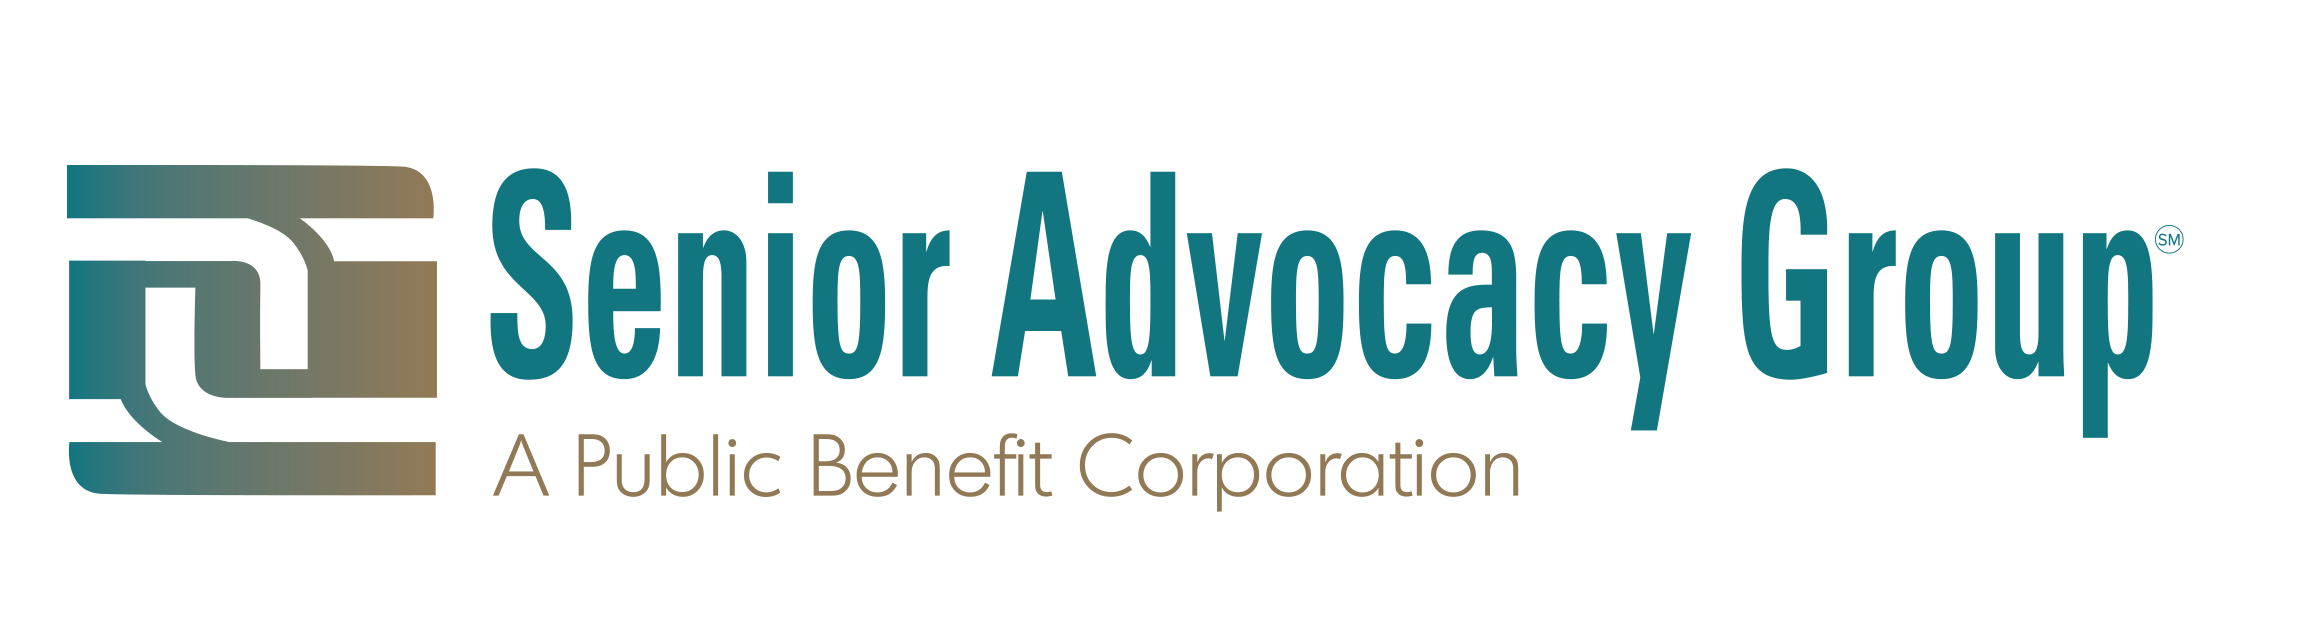 Senior Advocacy Group, Inc.